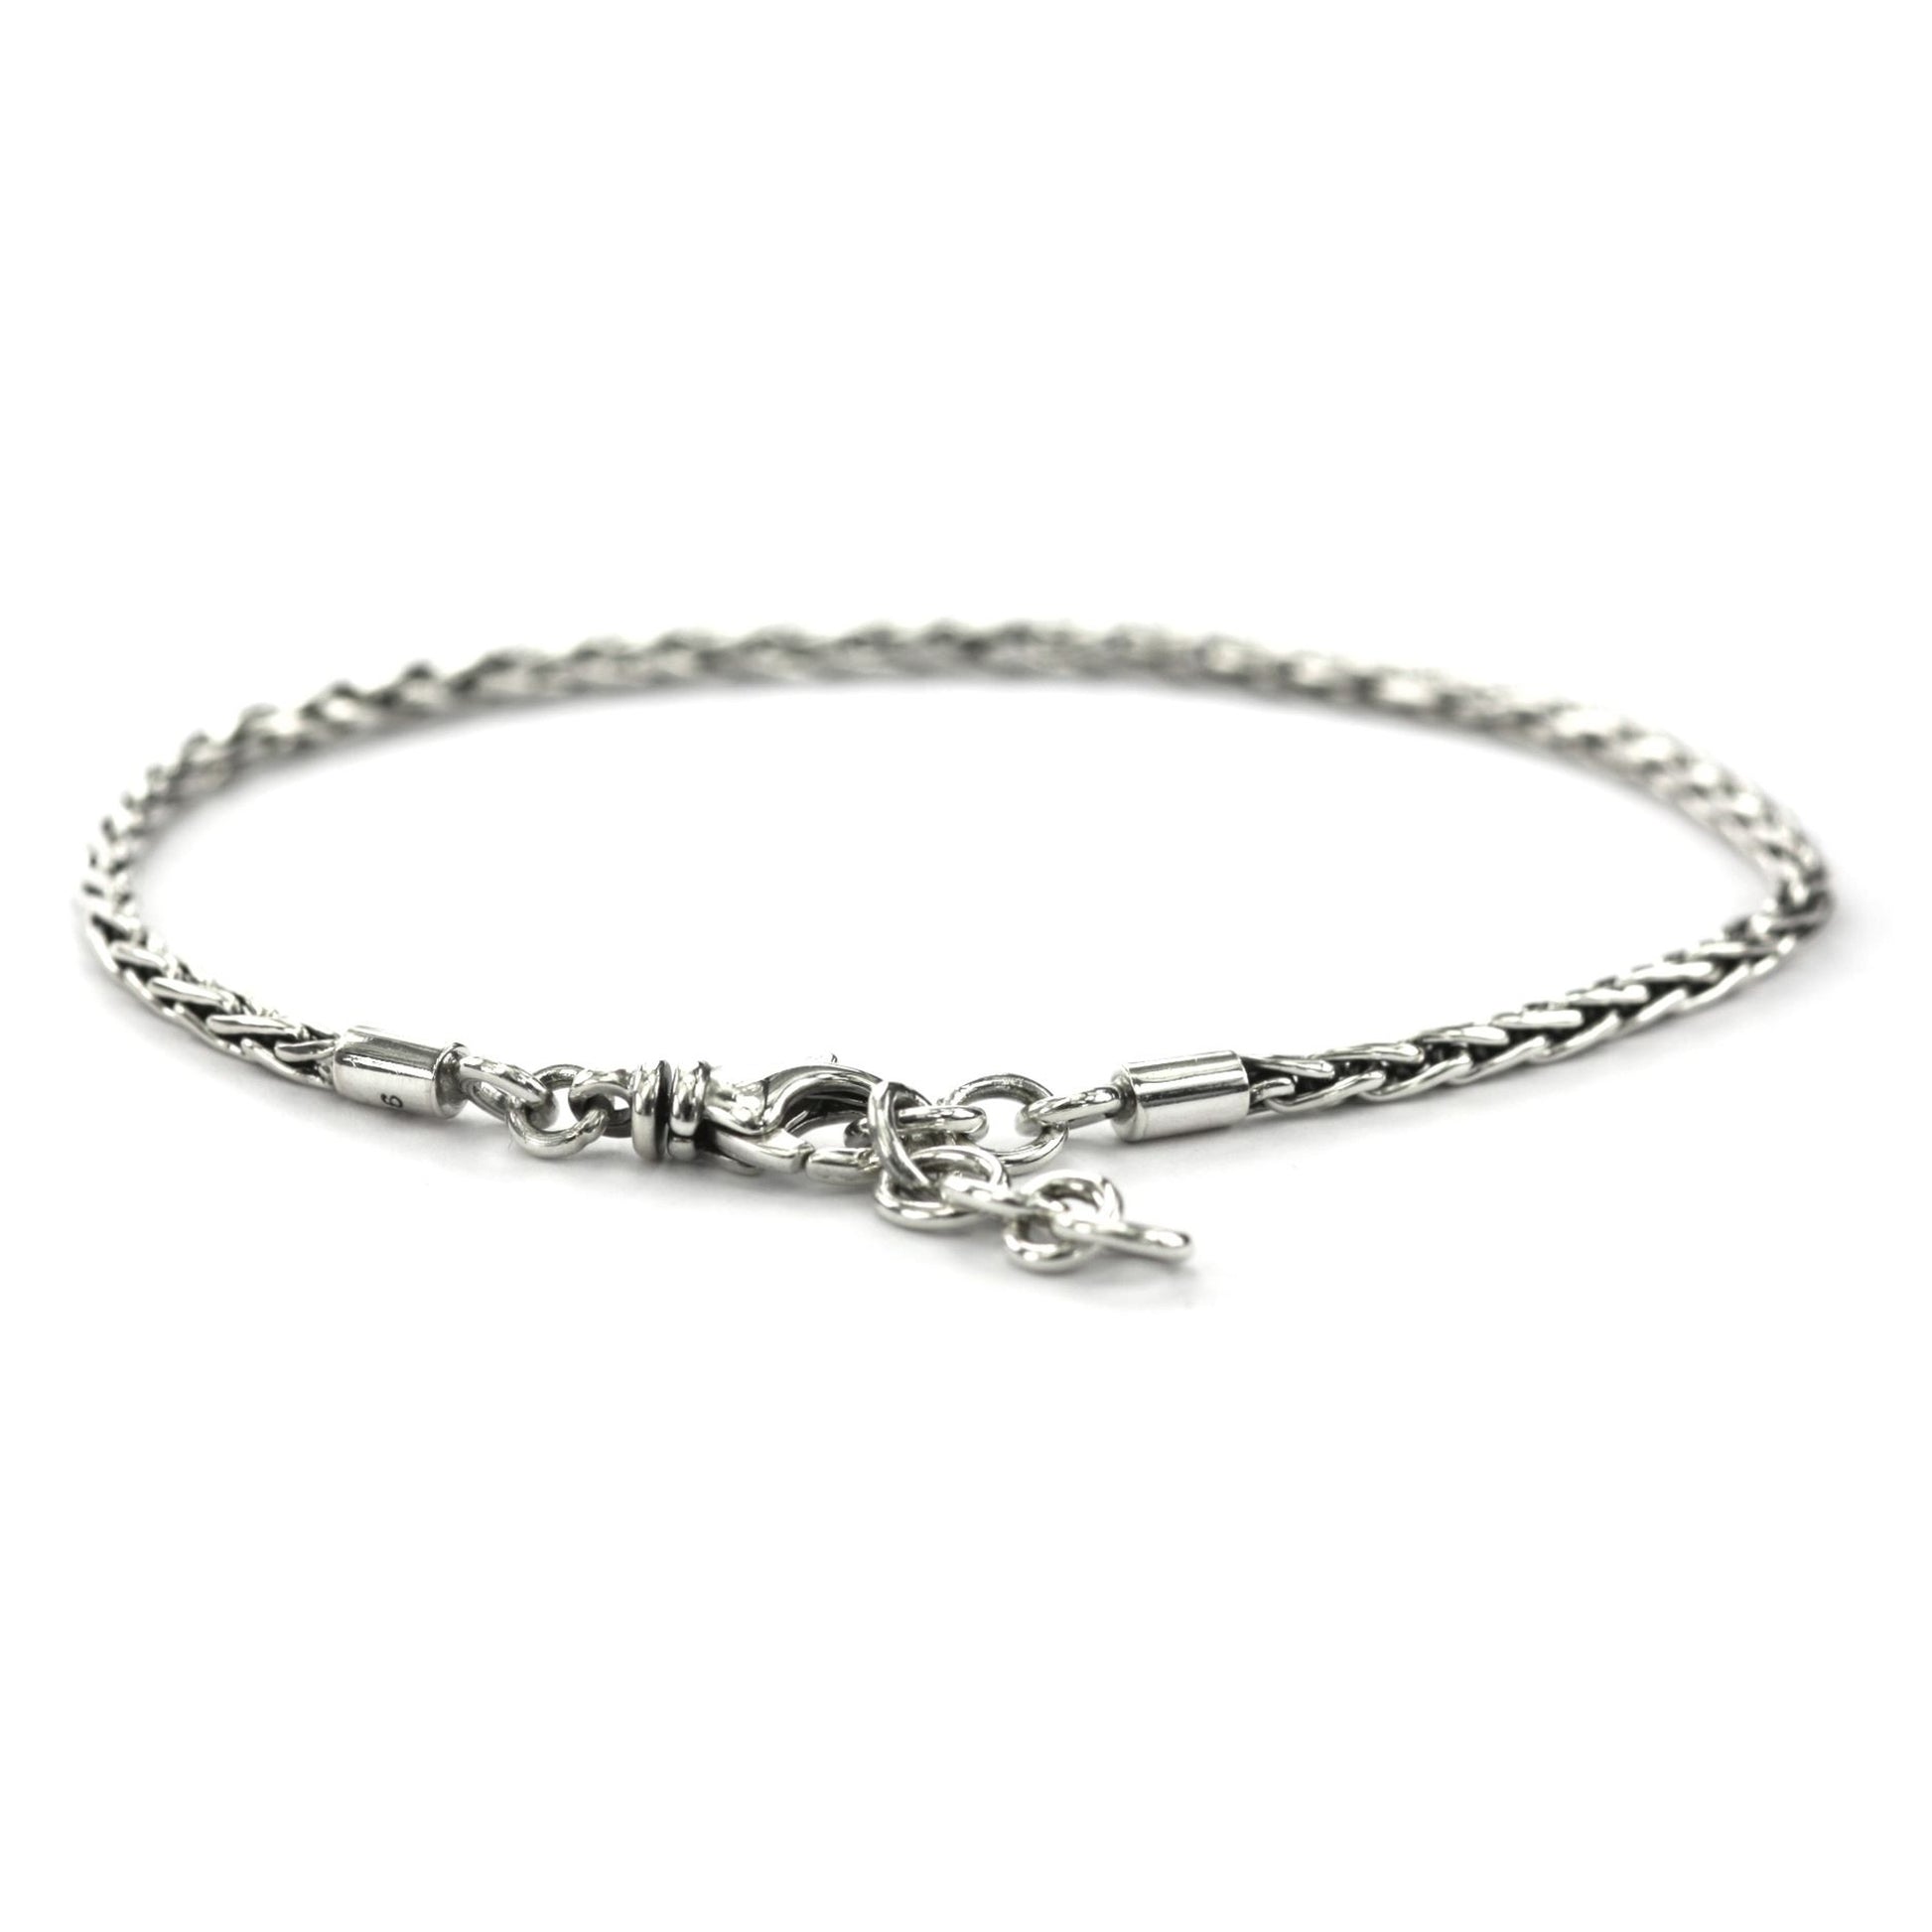 Wheat design silver chain bracelet.